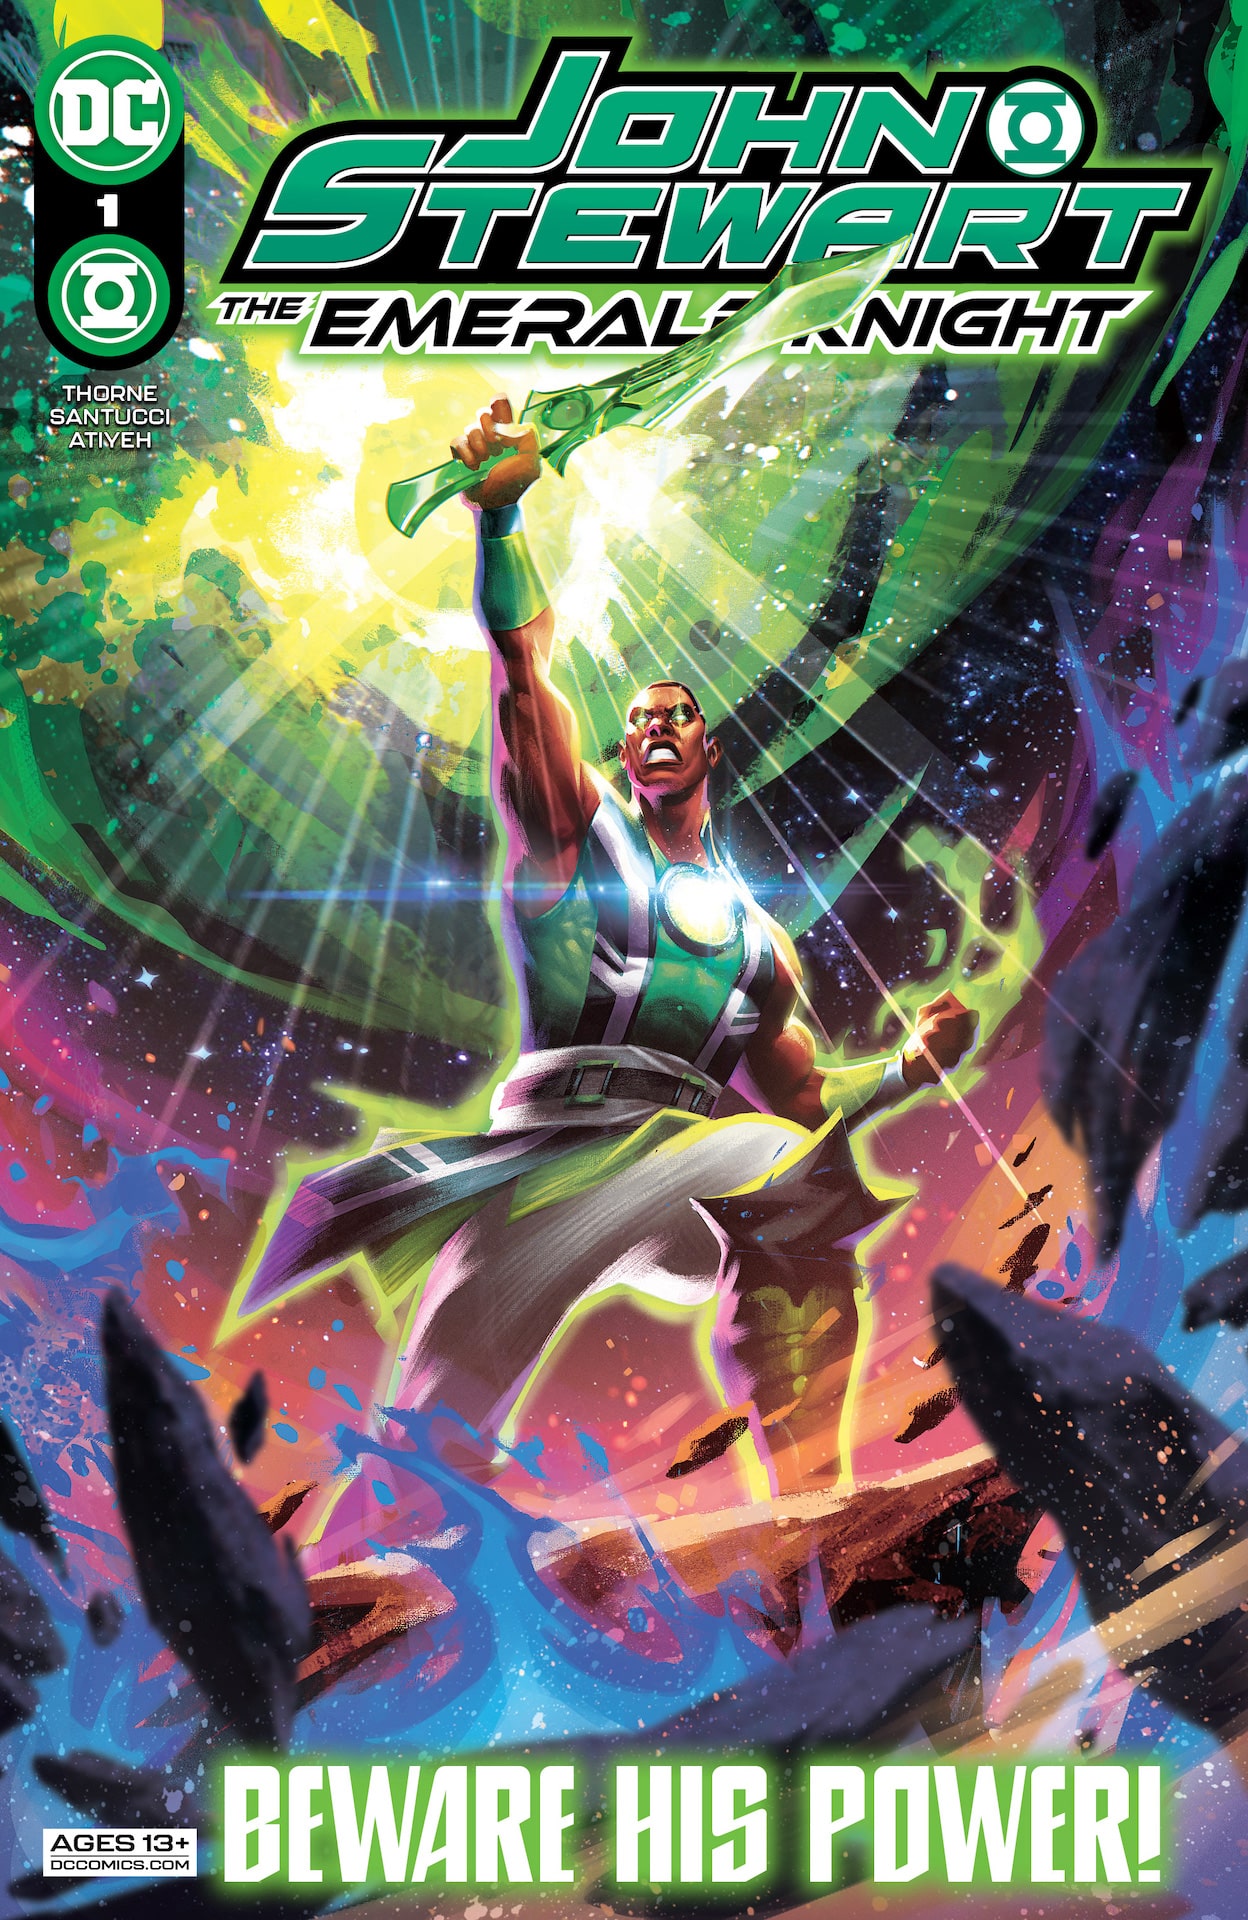 DC Preview: John Stewart: The Emerald Knight #1